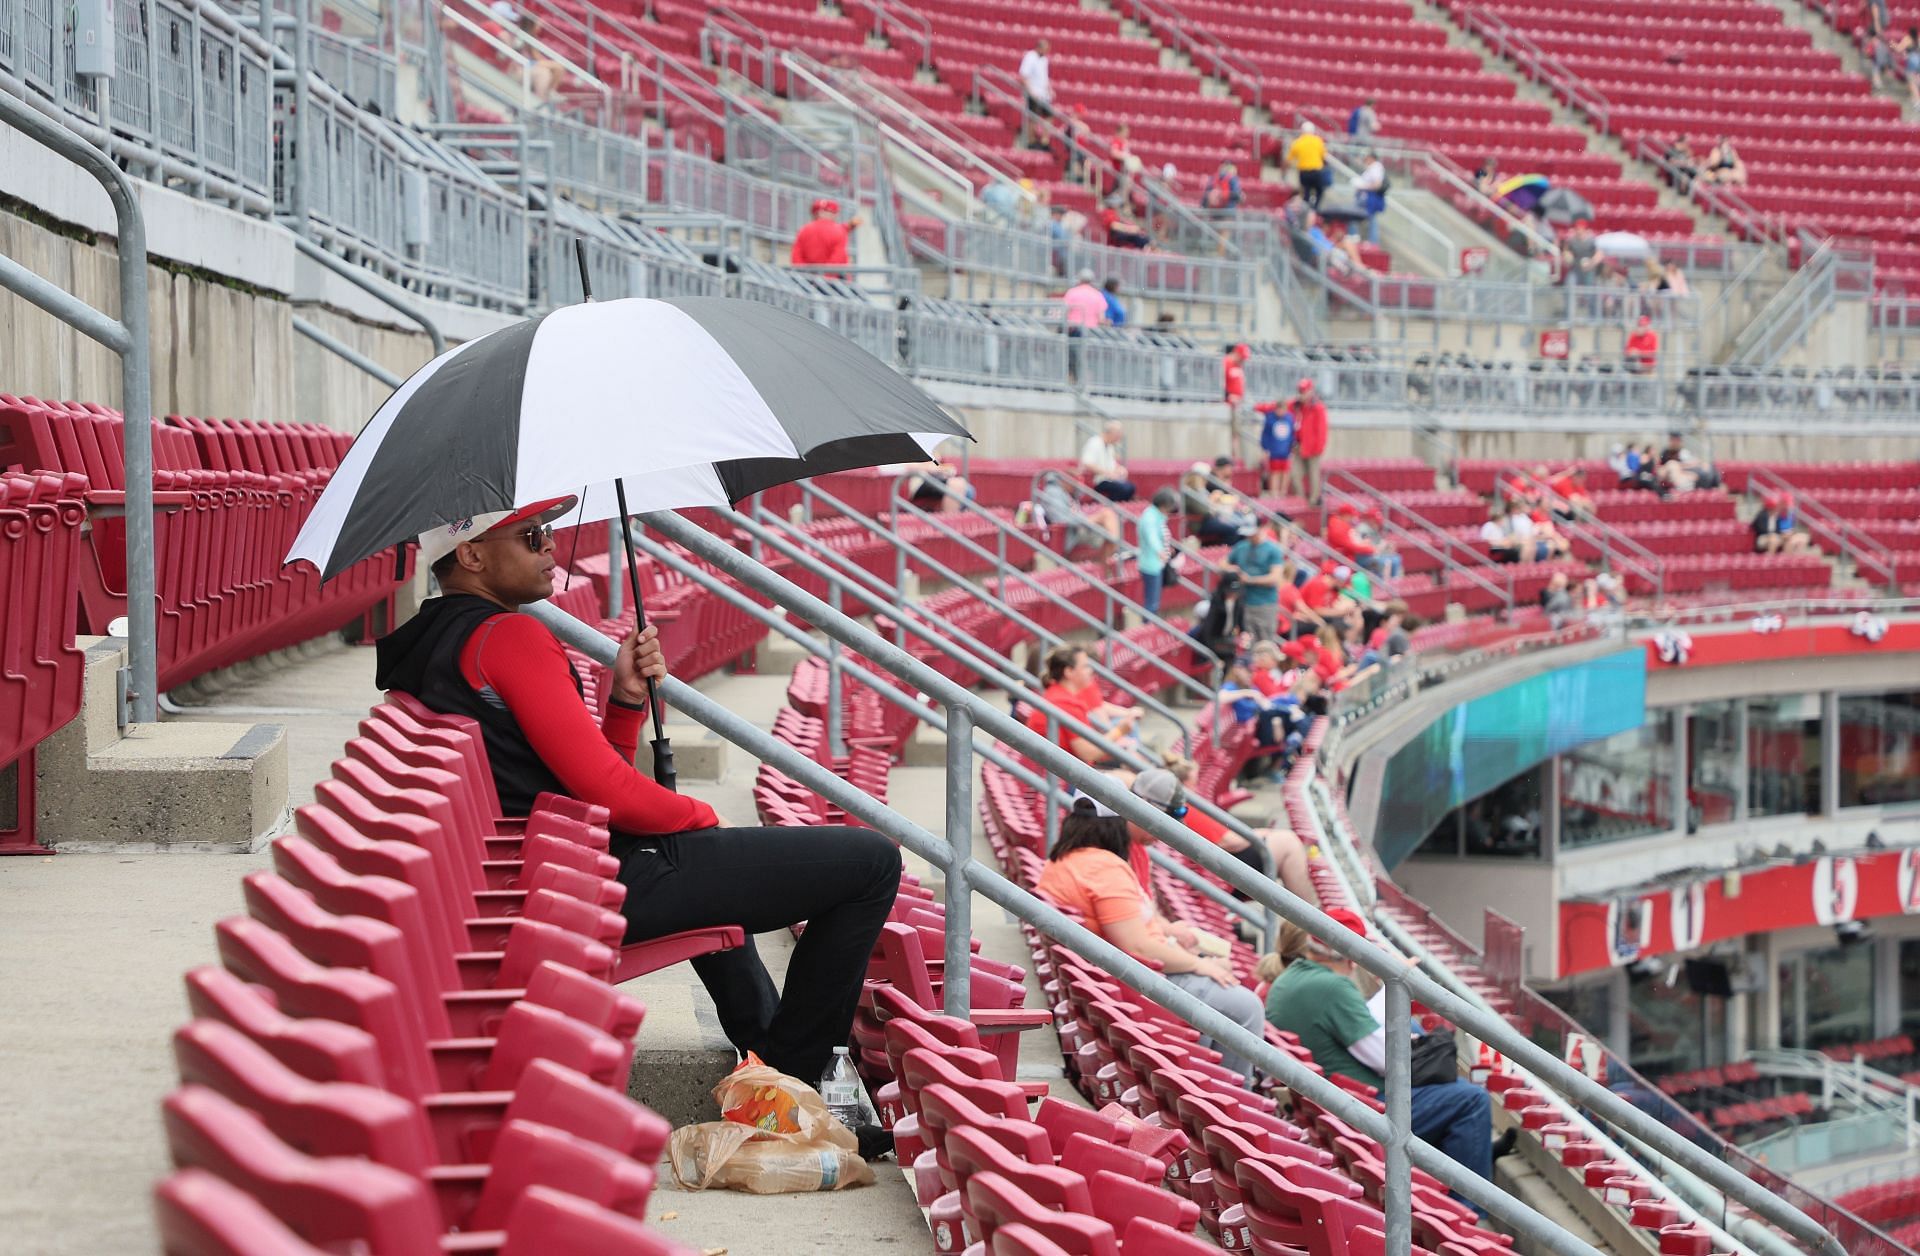 MLB Rain Delay Rules Explained A Guide for Baseball Fans